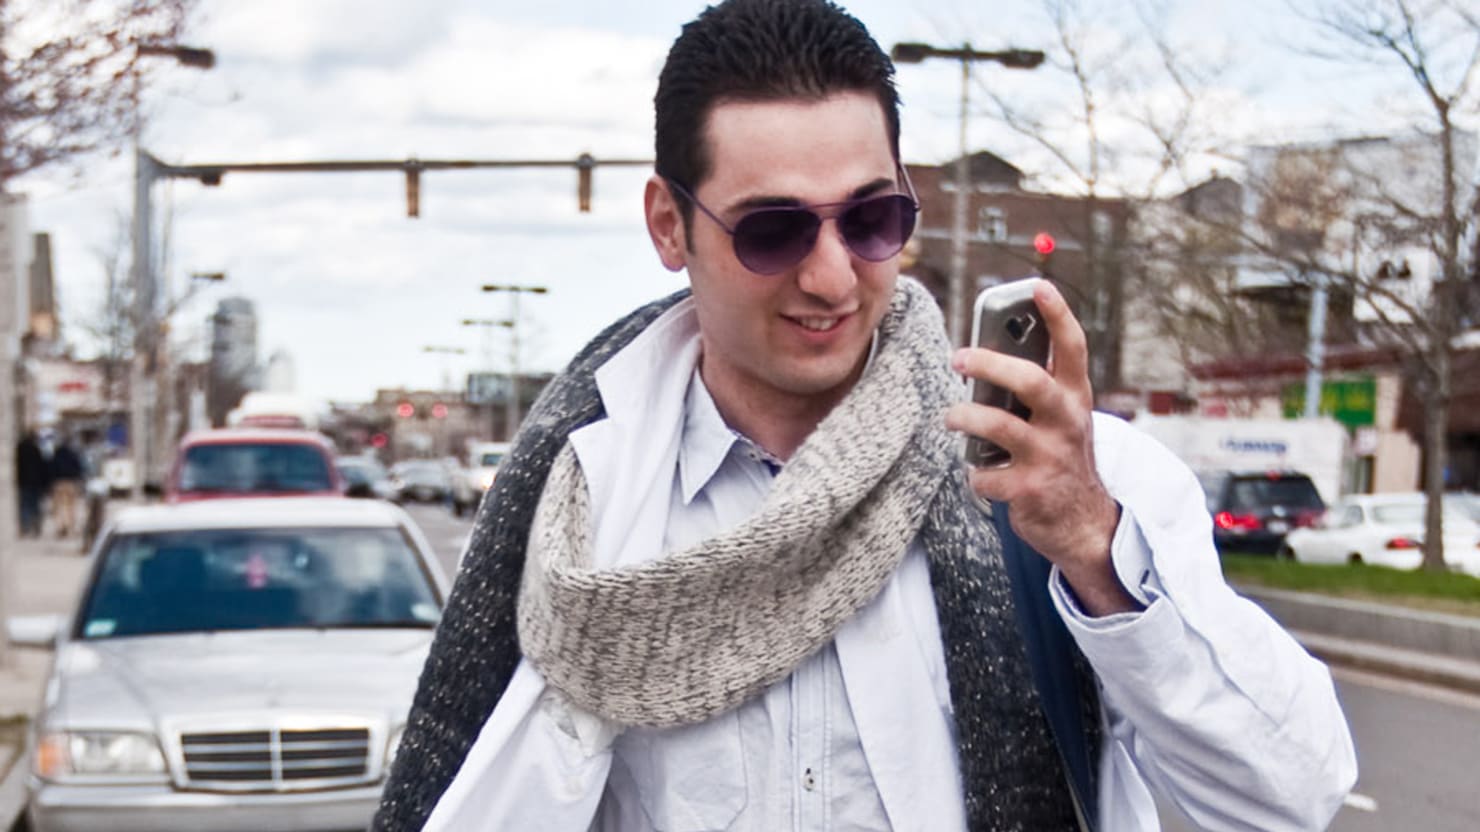 Tamerlan Tsarnaevs hometown Cambridge, MA, will not allow 